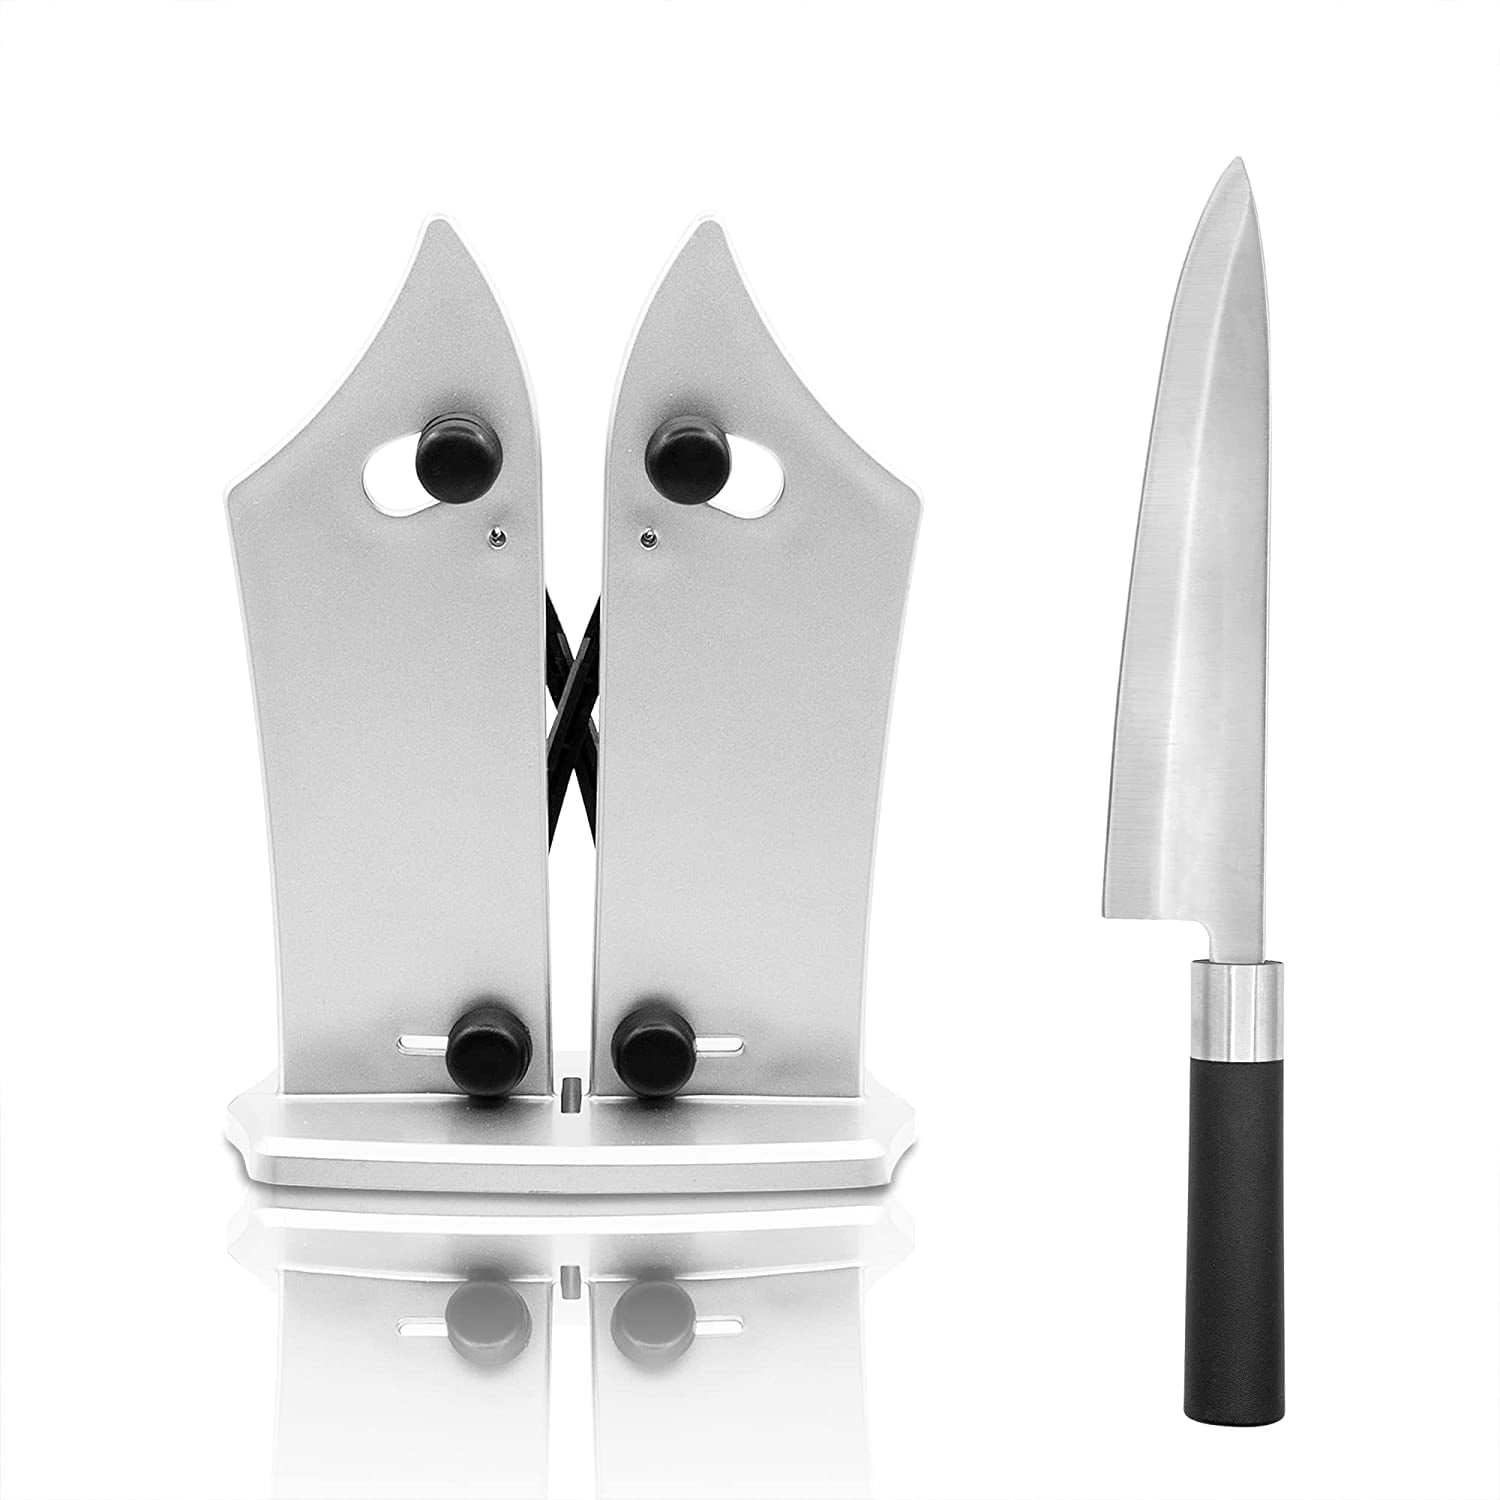 Bavarian Edge Knife Sharpener Silver/Black